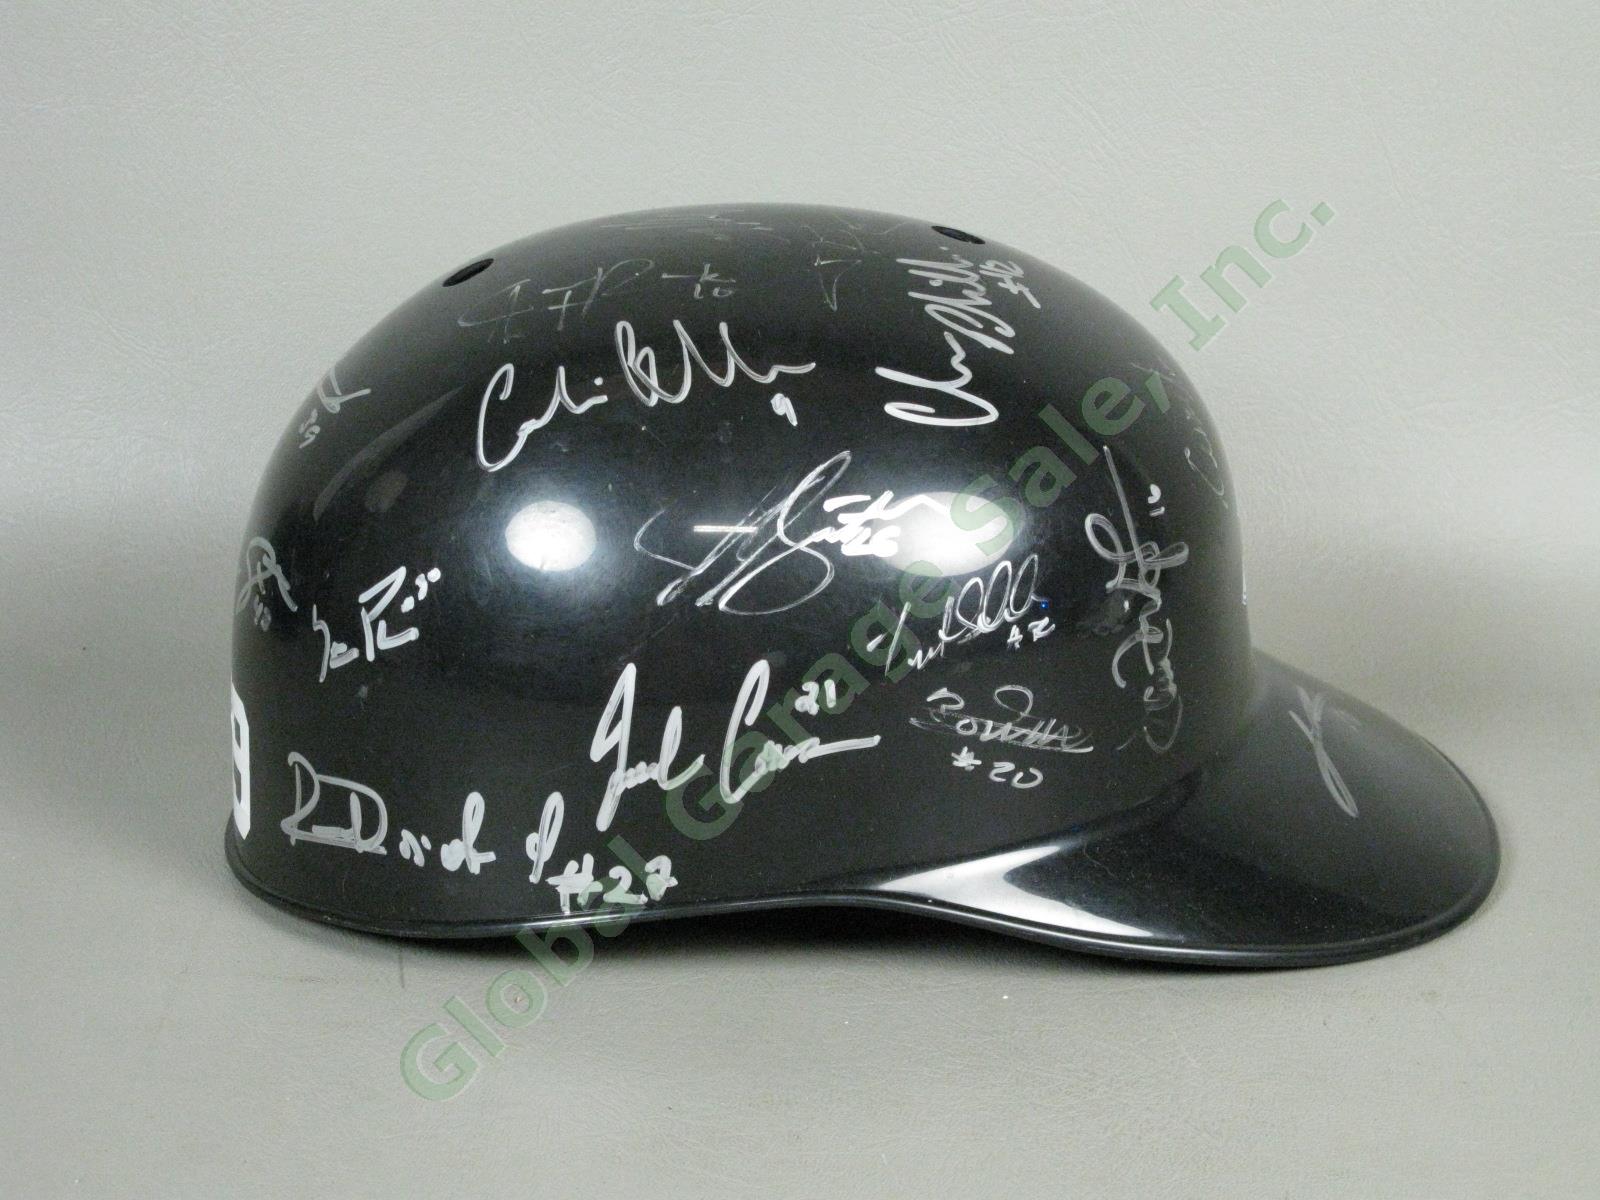 2009 Aberdeen Ironbirds Team Signed Baseball Helmet NYPL Baltimore Orioles NR 1